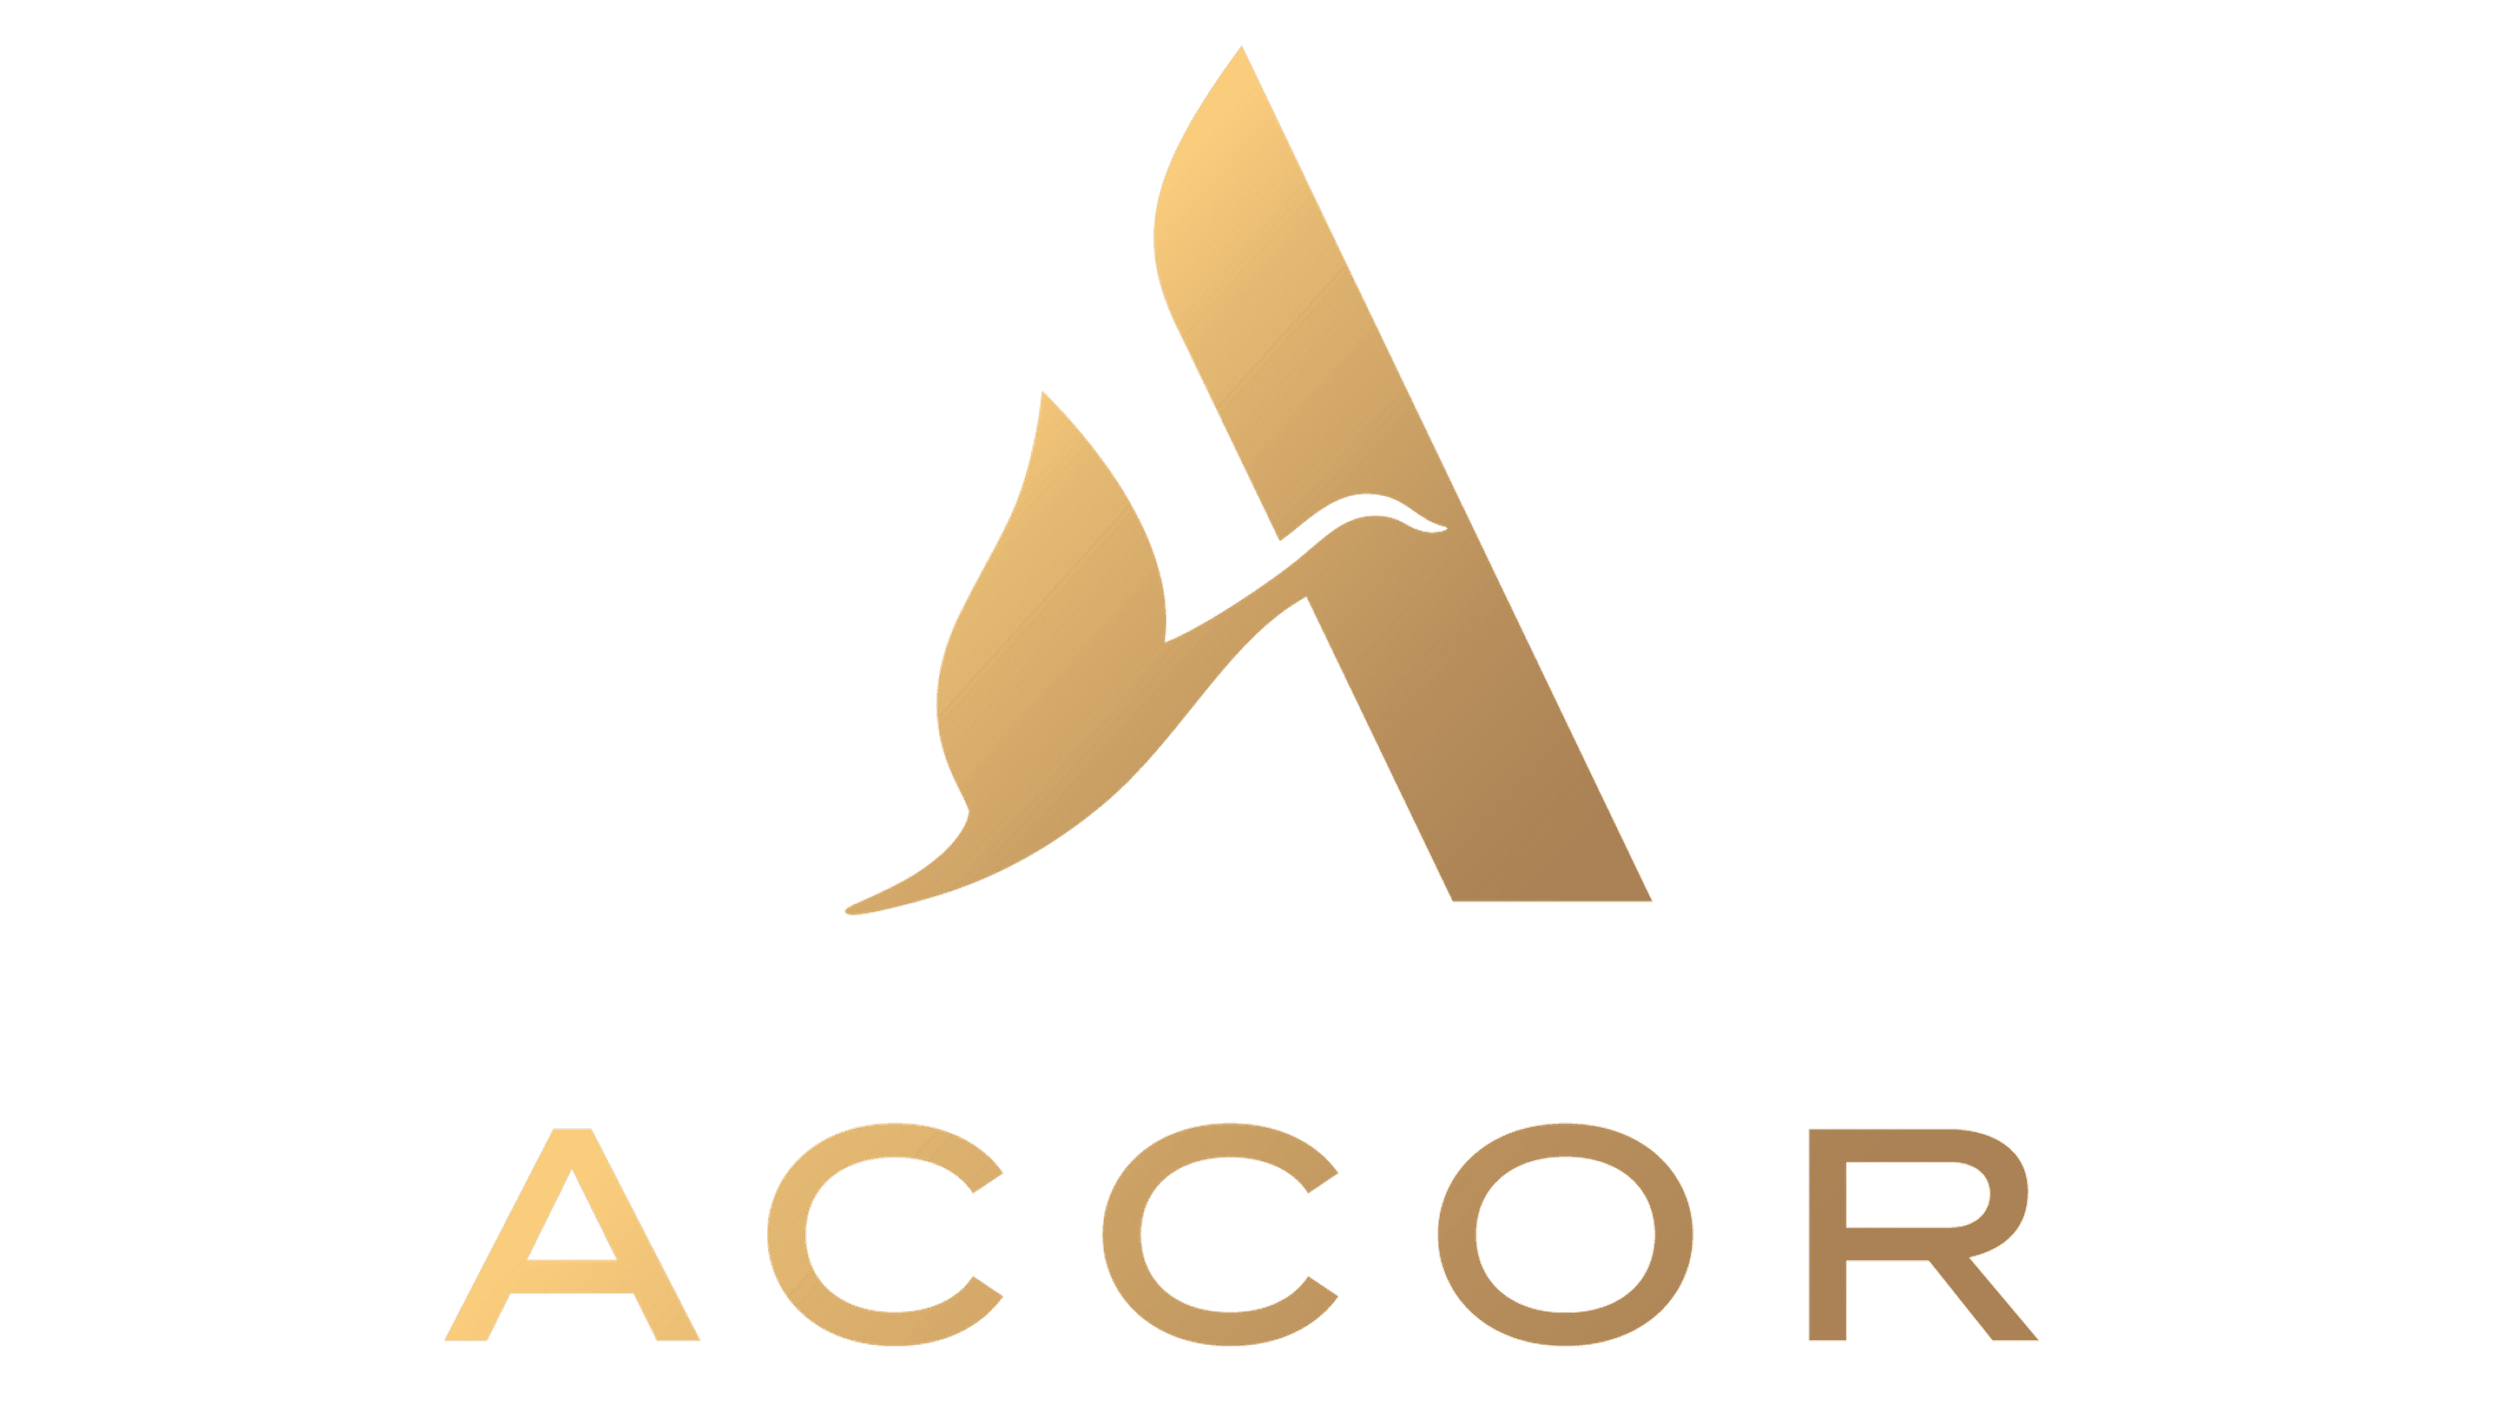 Accor-logo.png